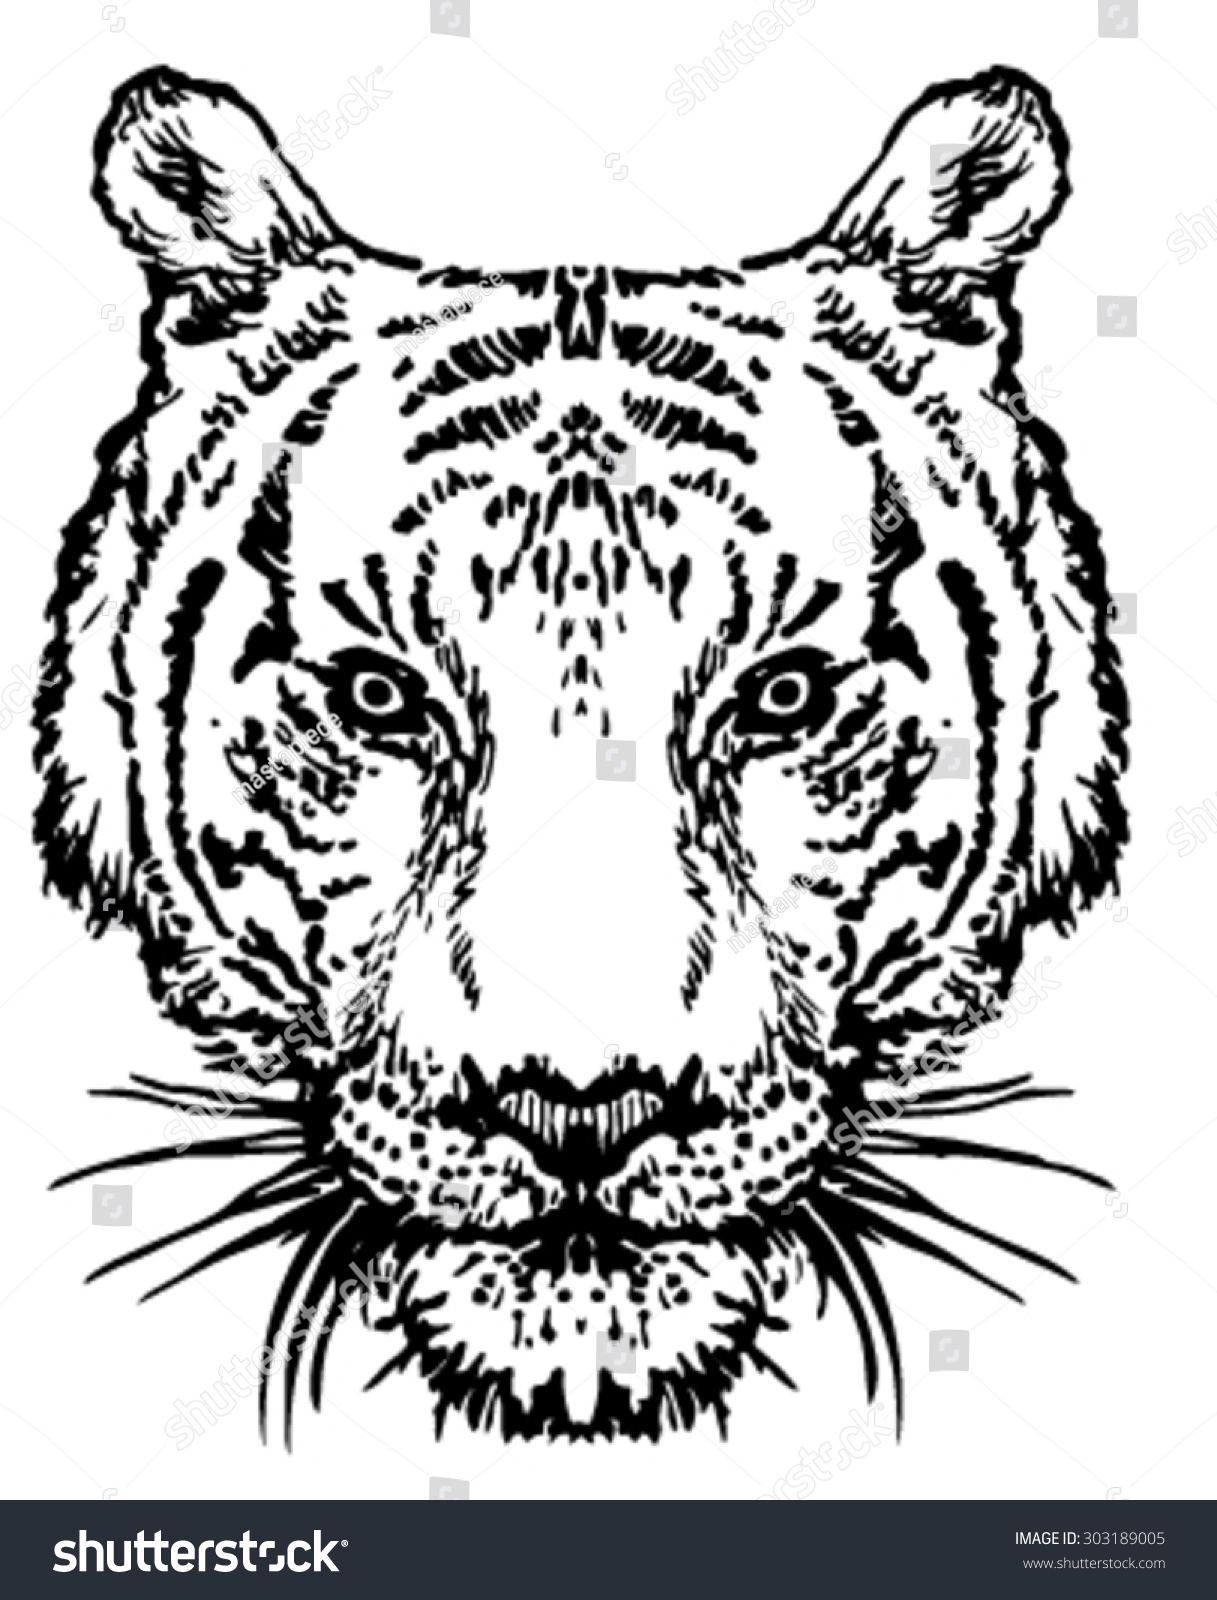 Симметричный рисунок тигра